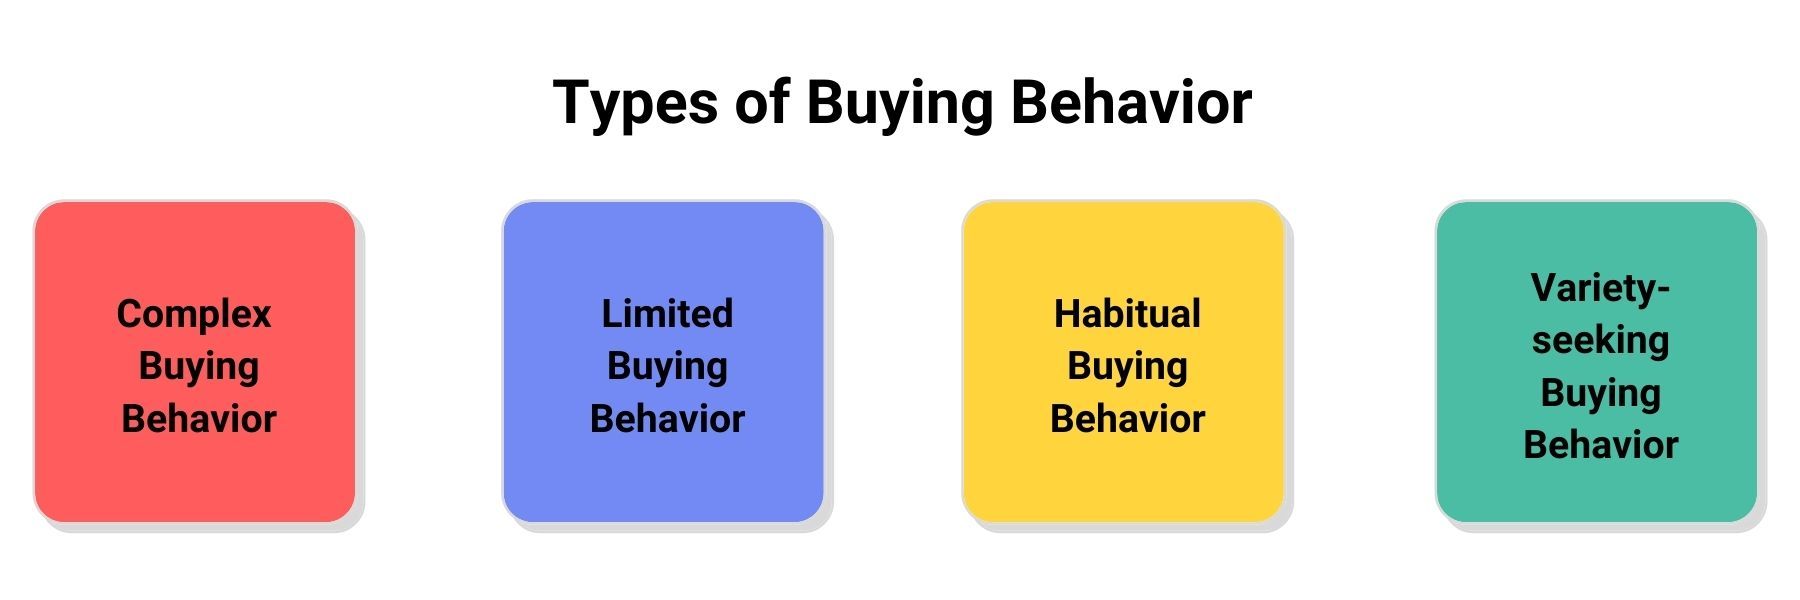 types of consumer buying behavior 